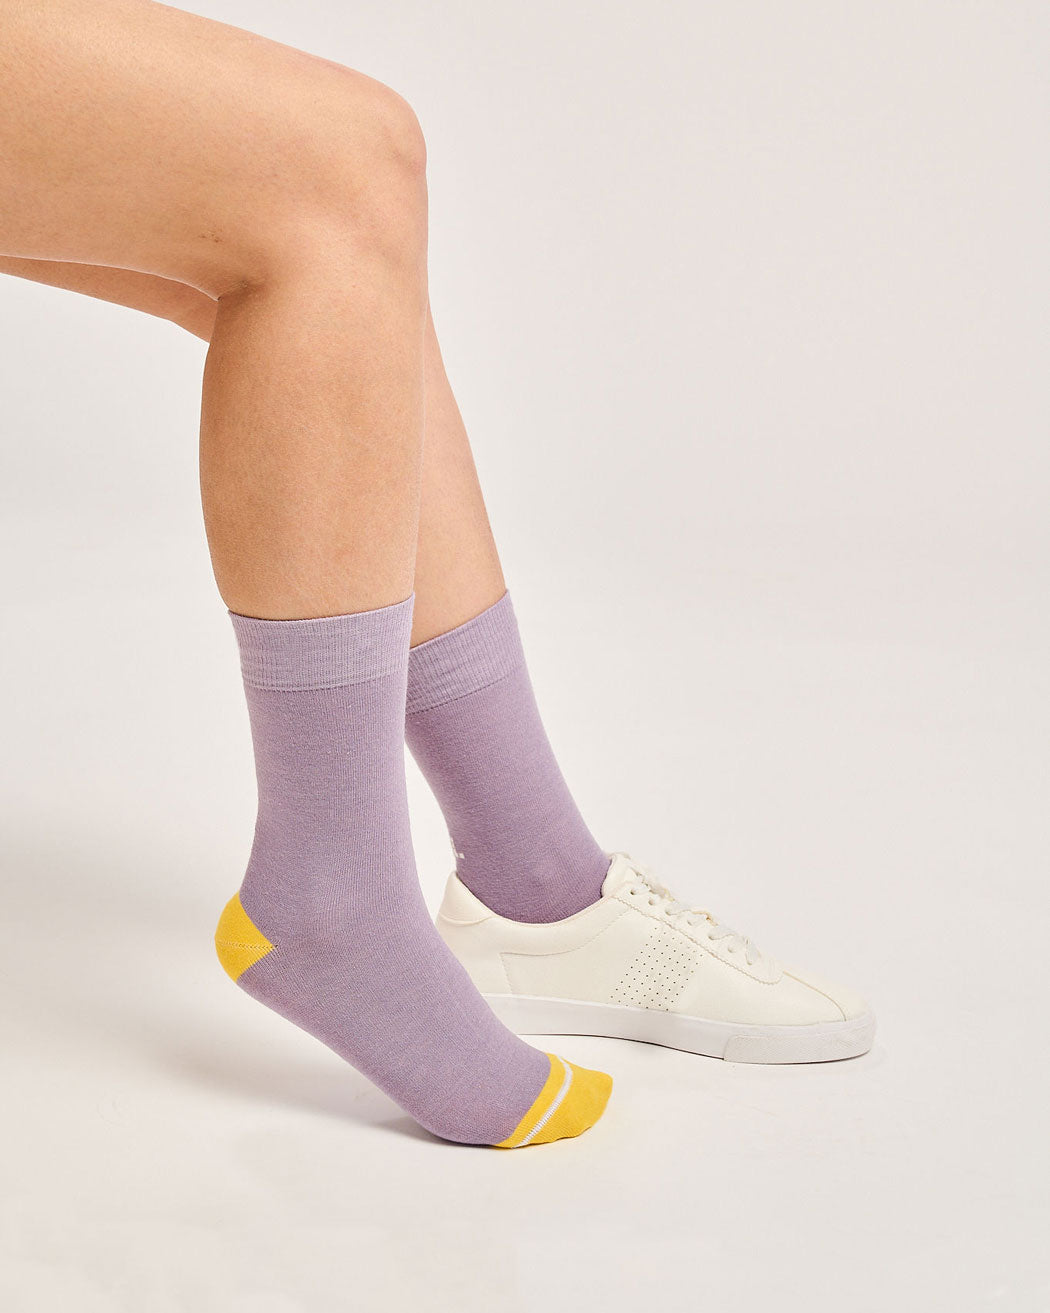 Seamless toe everyday socks for women. Lilac socks ecofriendly socks.